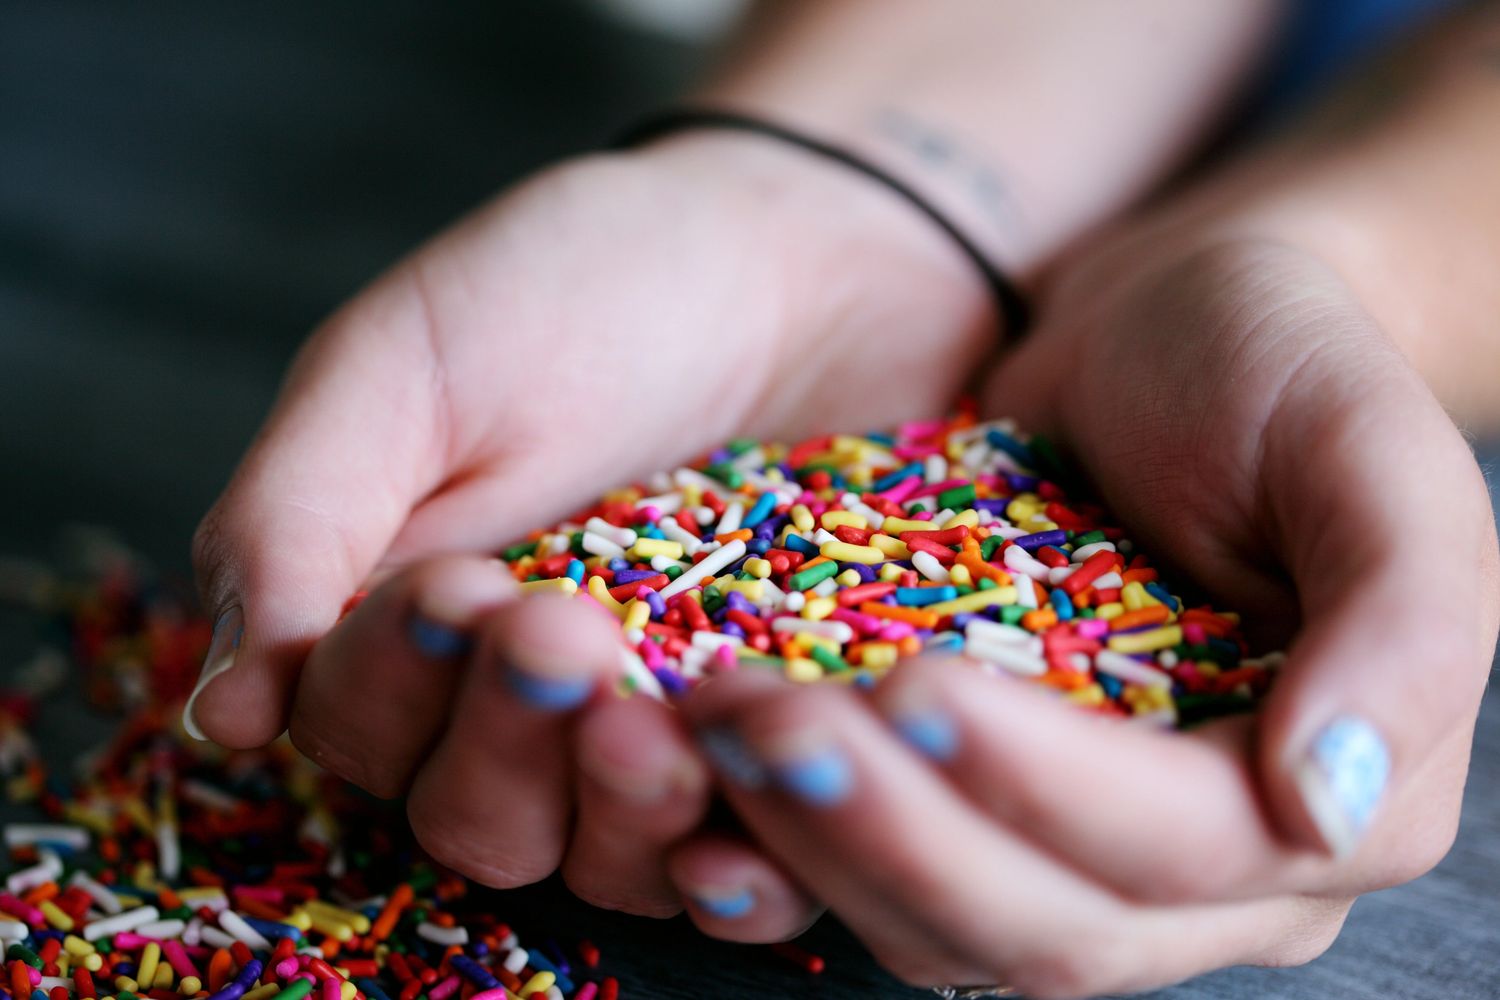 Hands full of colorful jimmie sprinkles